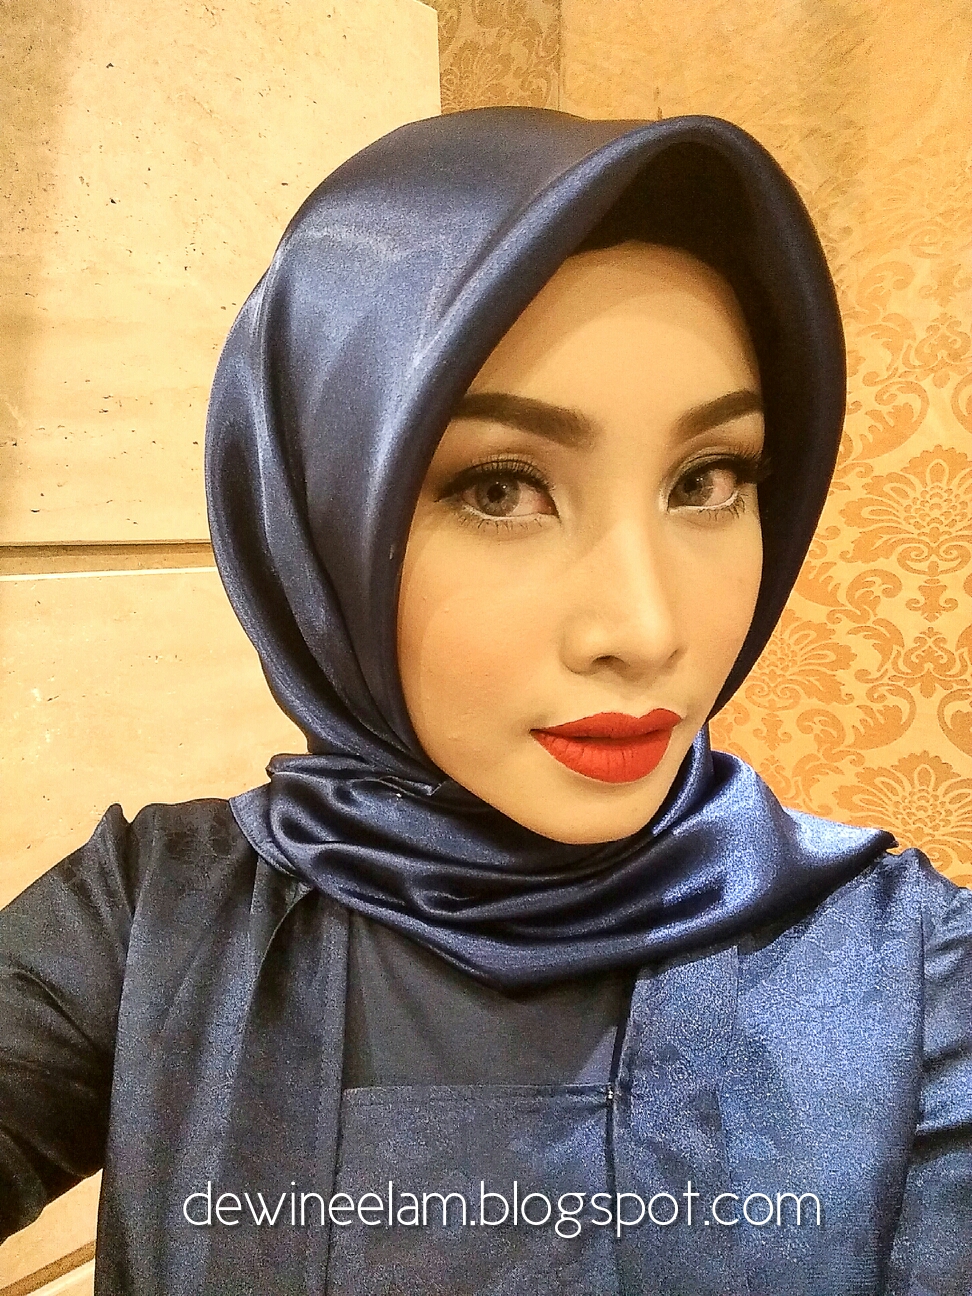 16 Cara Memakai Jilbab Yang Bagus Ubtuk Kutu Baru Tutorial Hijab Indonesia